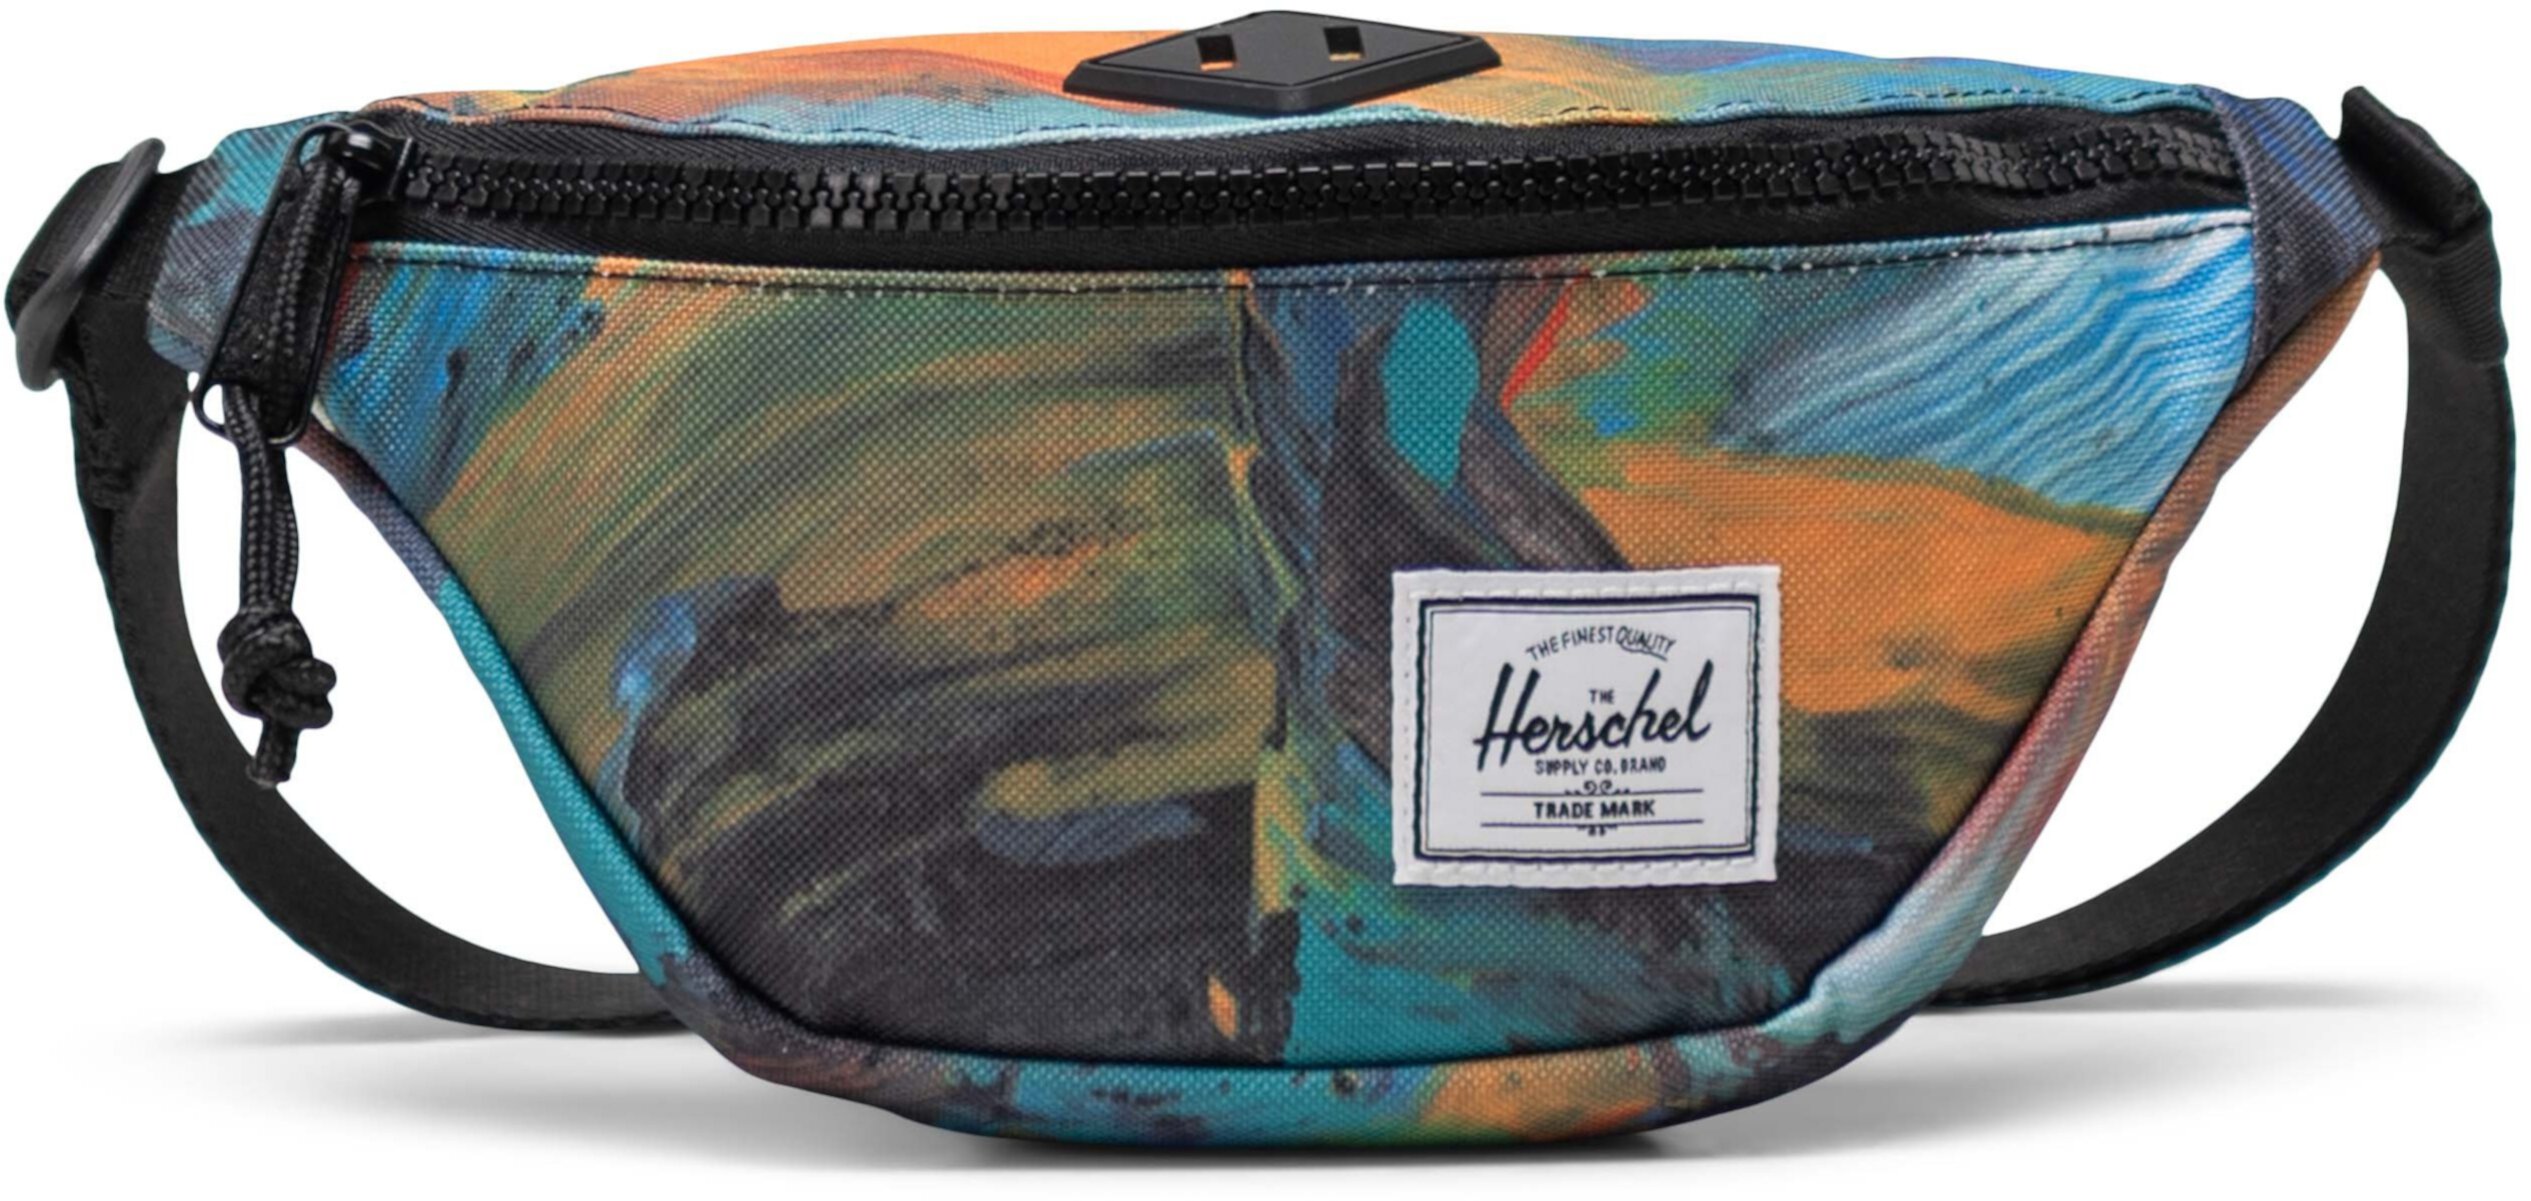 Поясная сумка Heritage™ Herschel